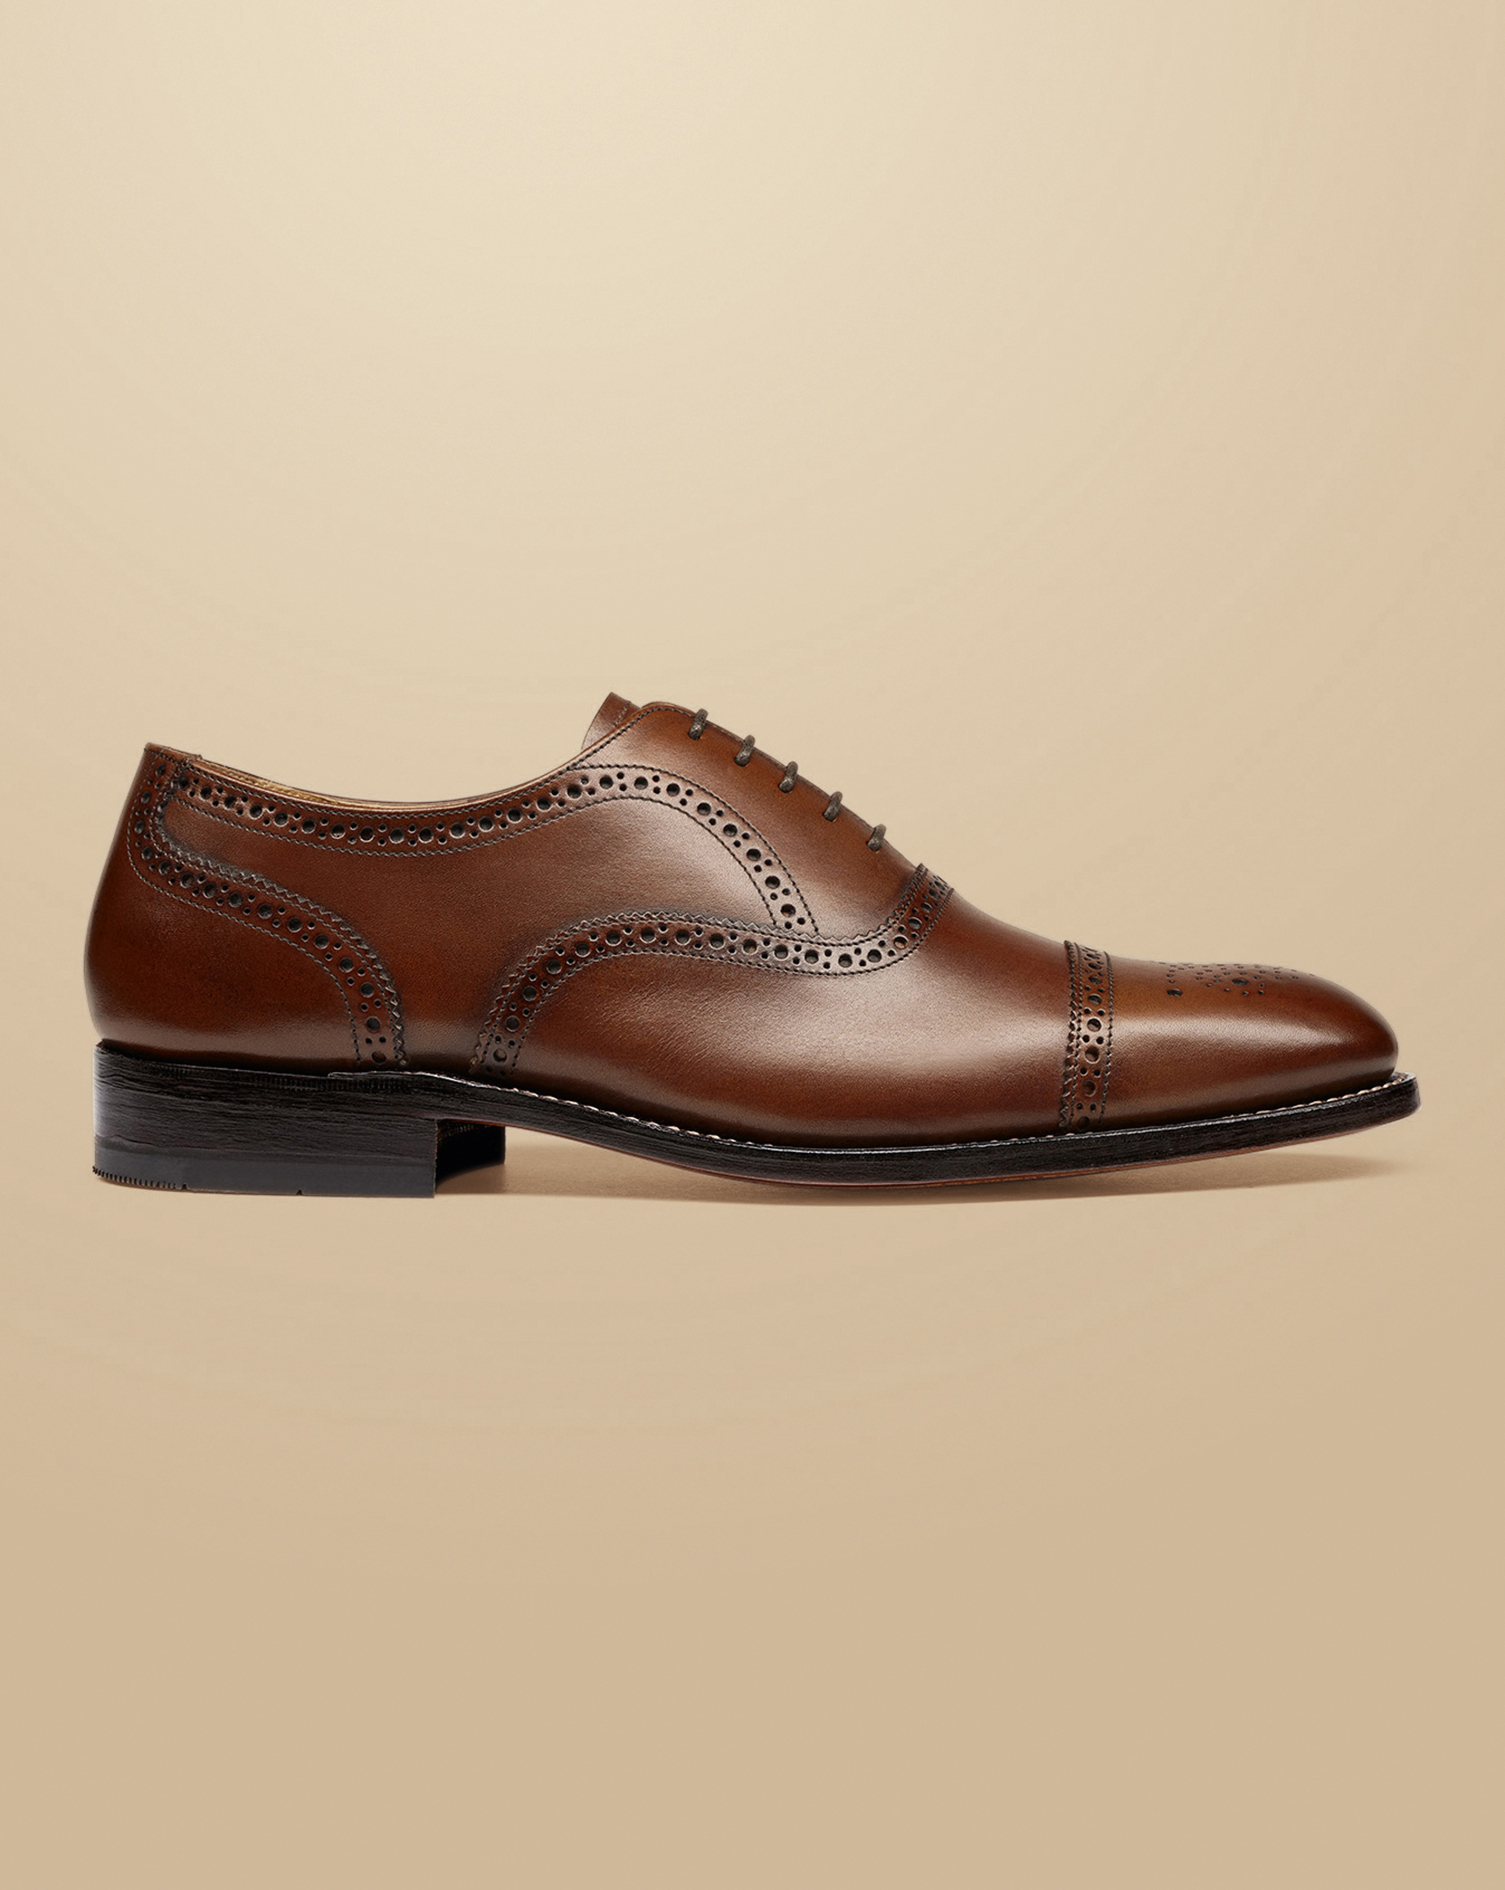 Men's Charles Tyrwhitt Oxford Brogue Shoes - Dark Tan Brown Size 10.5 Leather
